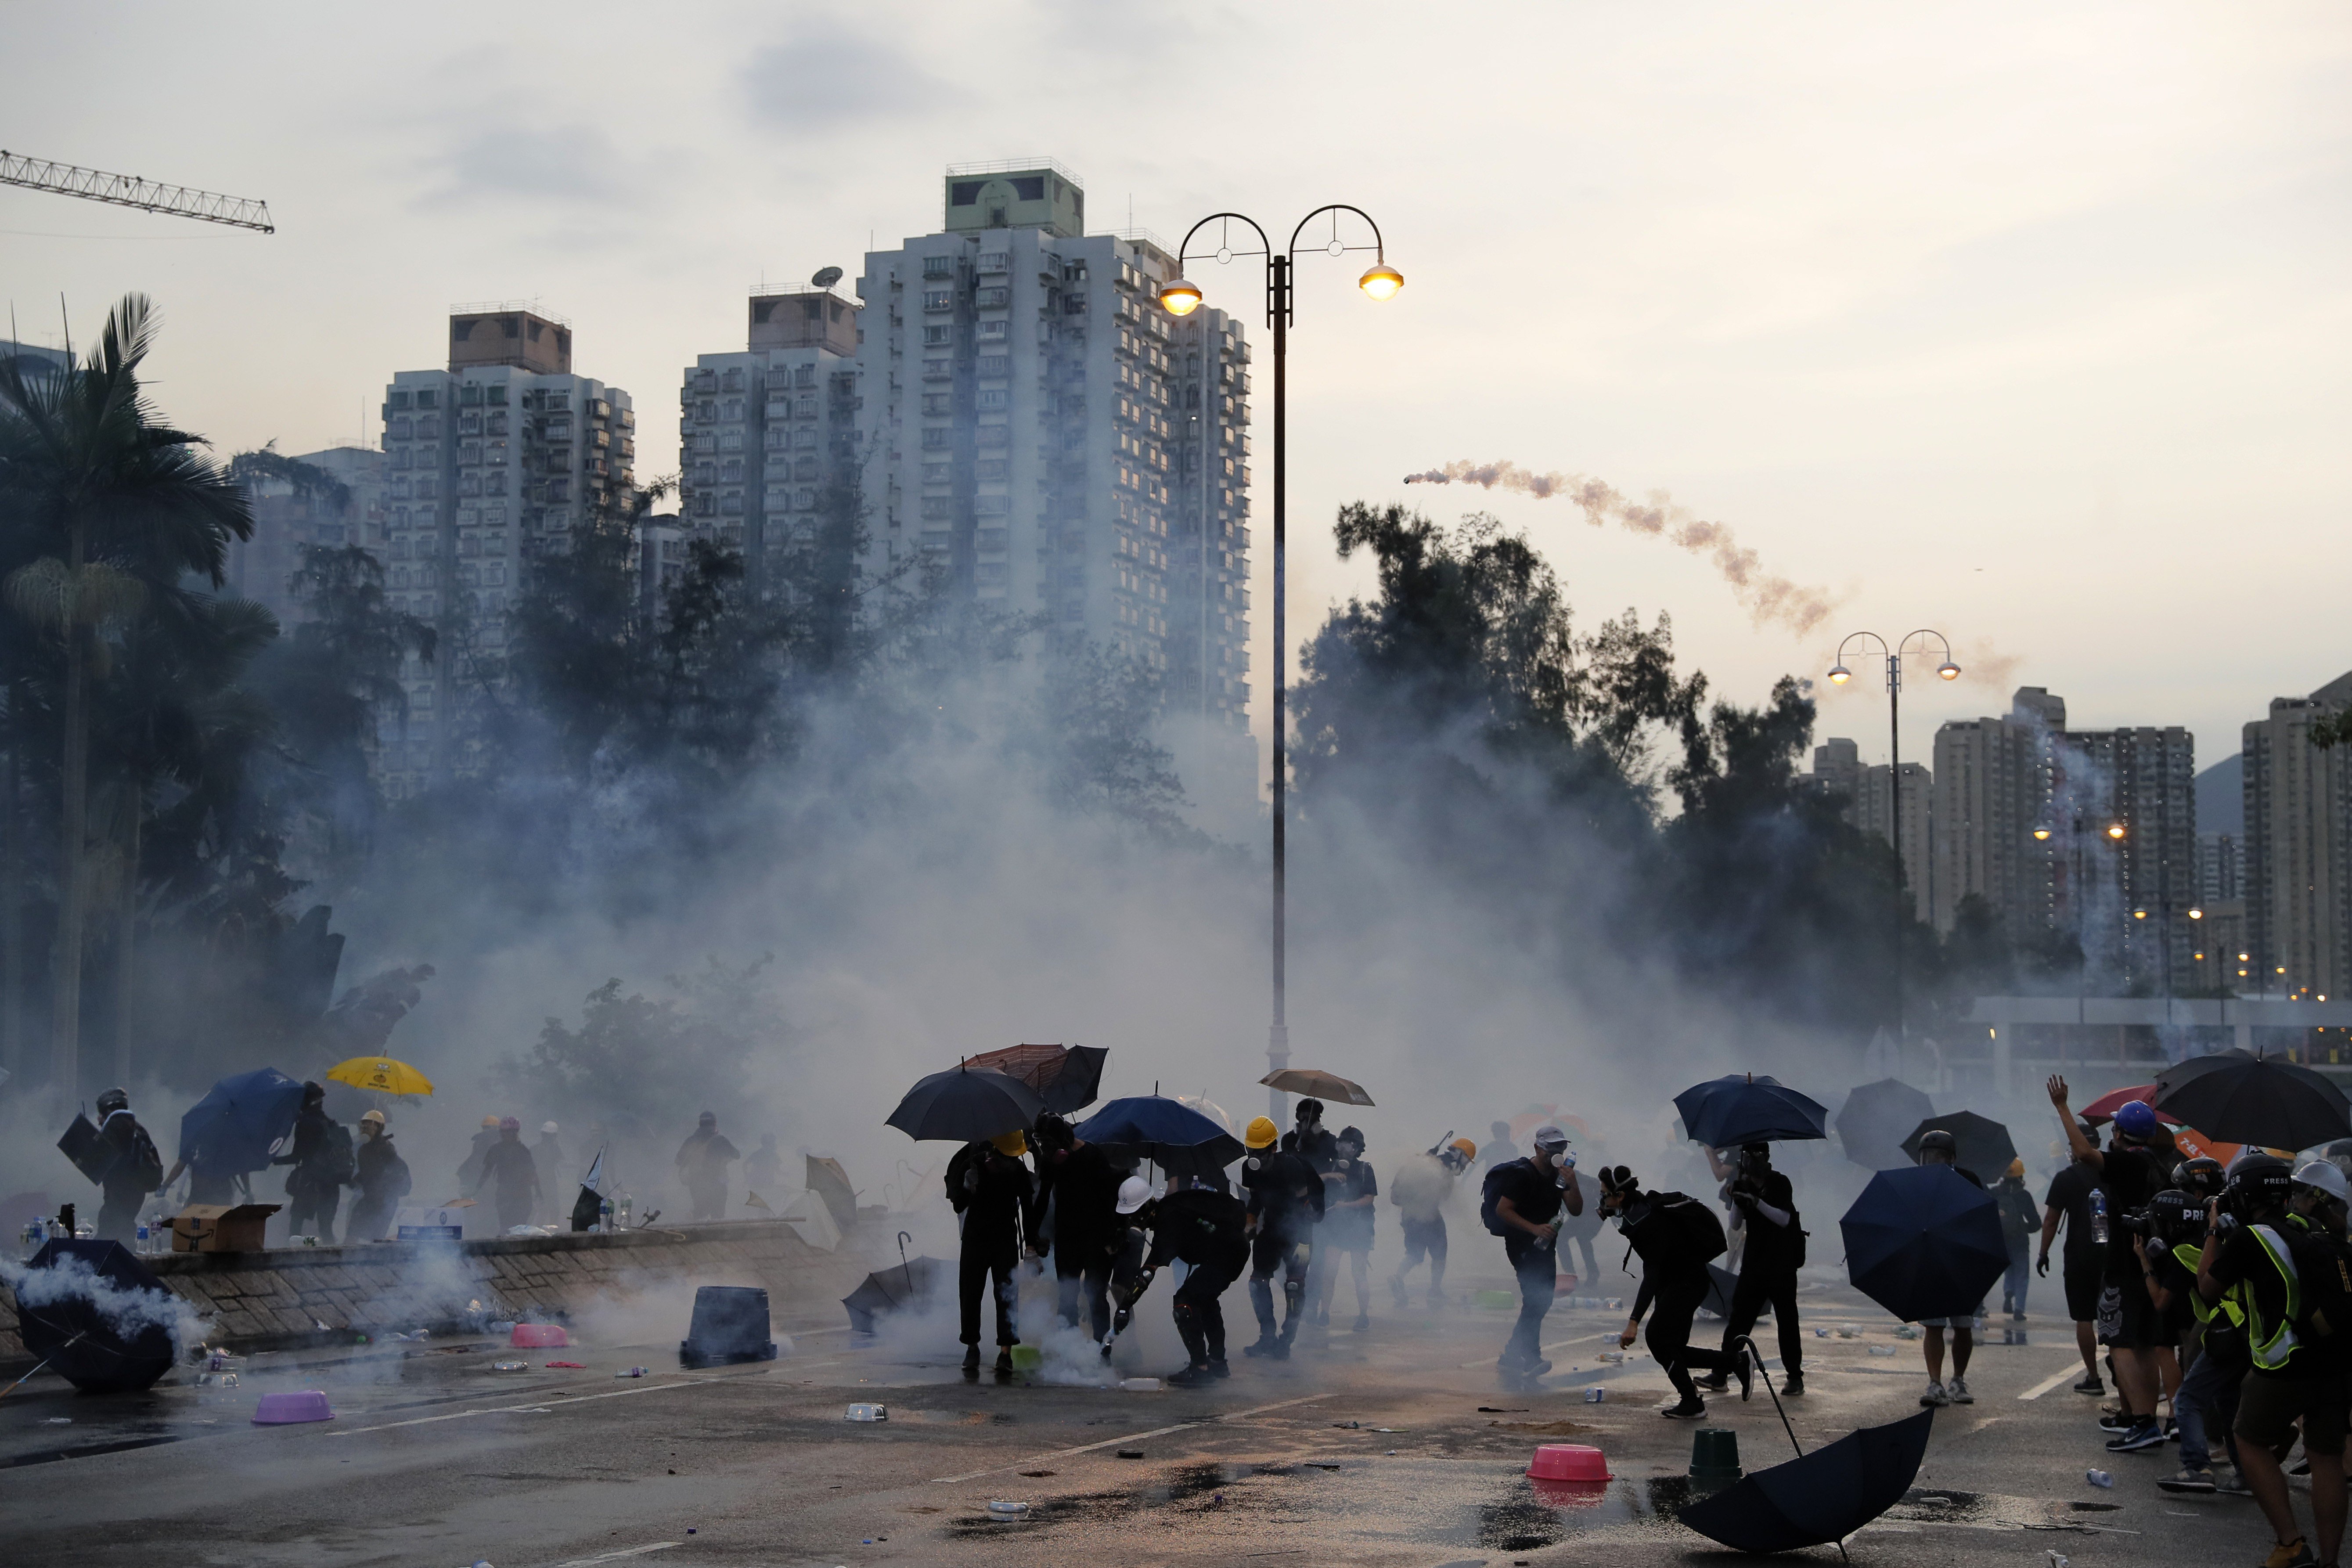 Protesters amid tear gas in Hong Kong. Photo: AP